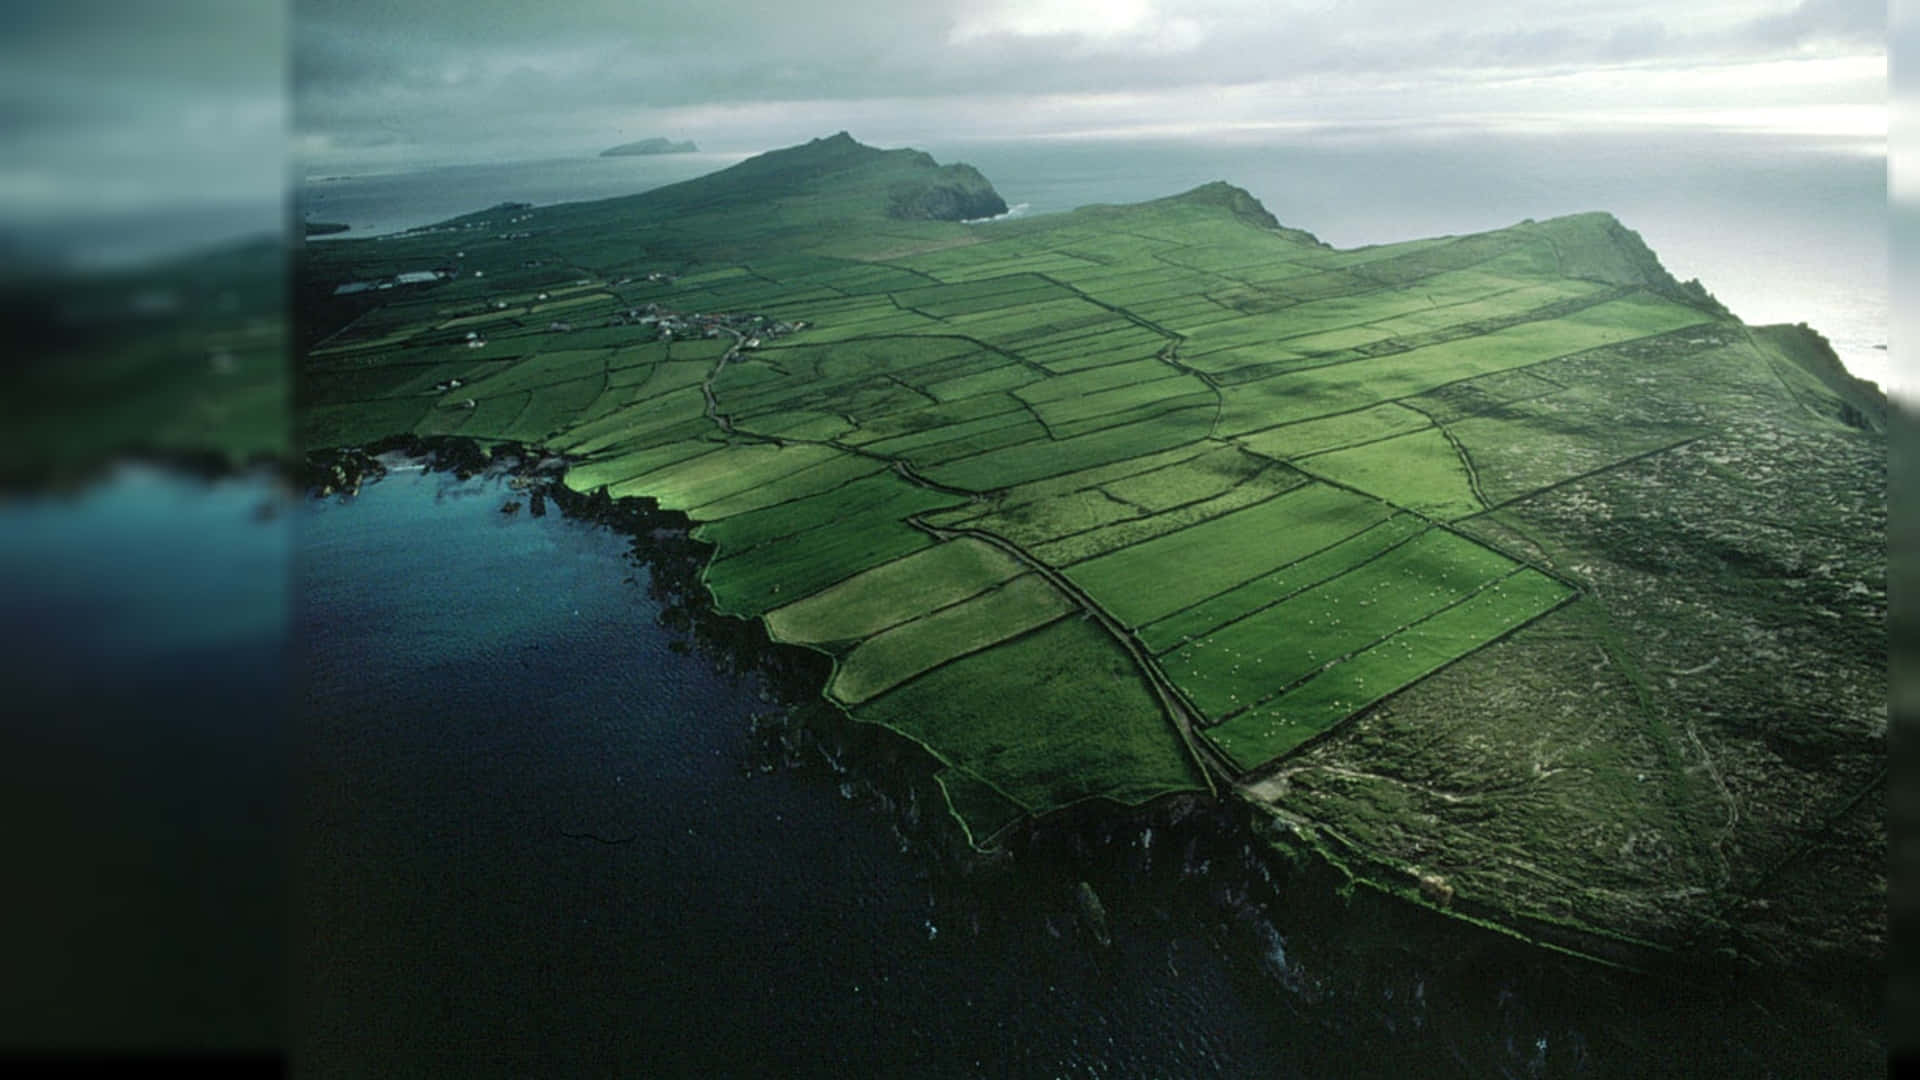 "Explore the lush landscape of Ireland" Wallpaper